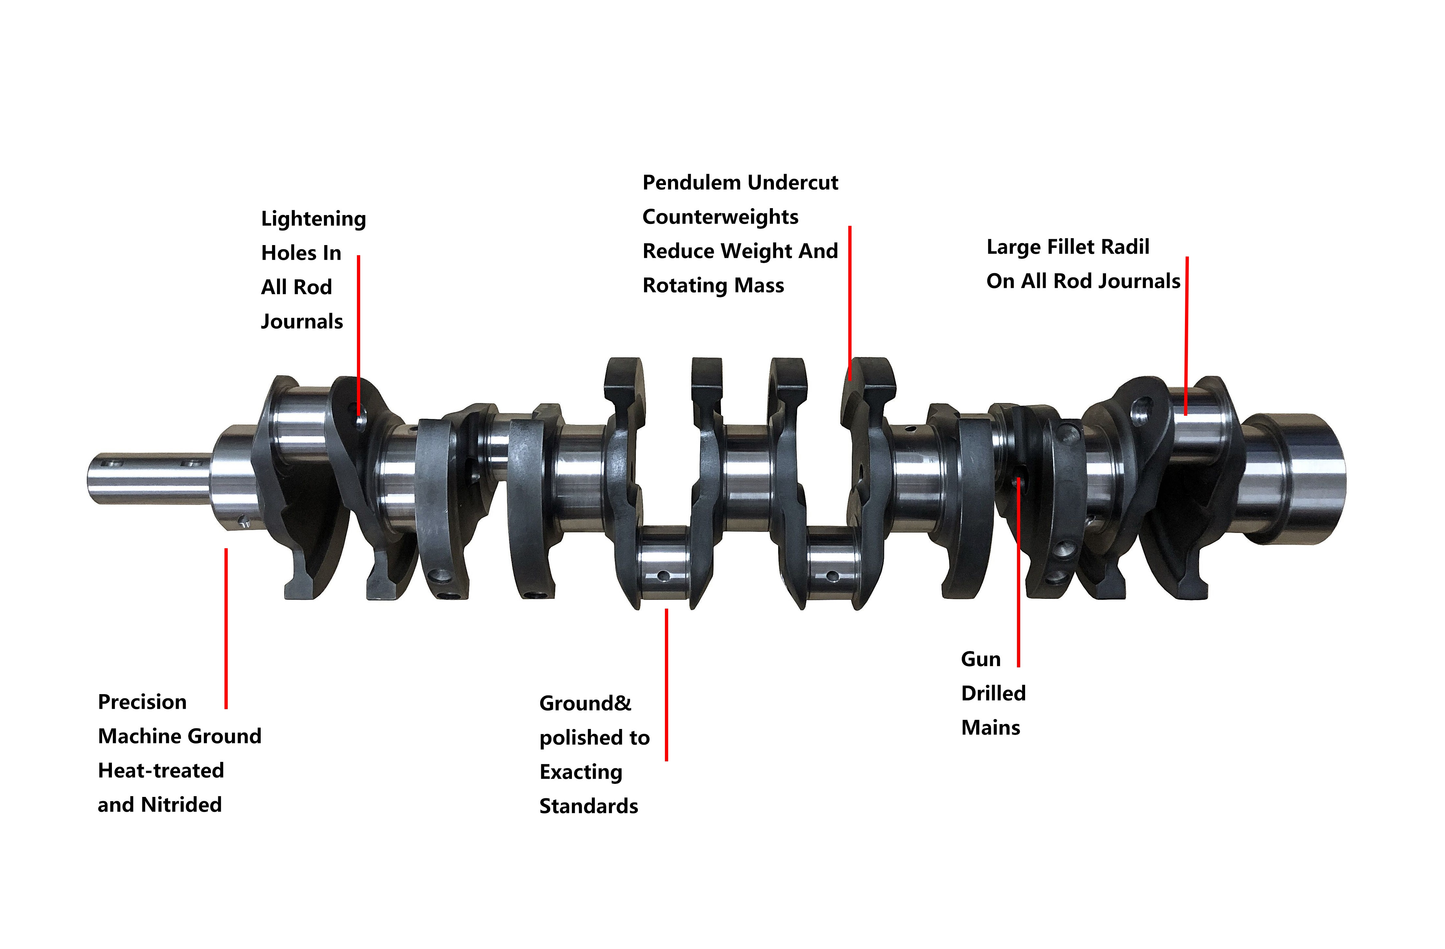 Adracing Engine Performance Custom CNC Billet 4340 S14B20 Crankshafts For BMW S14 E30 M3 Crankshaft 72.6mm Stroke Crank Shaft